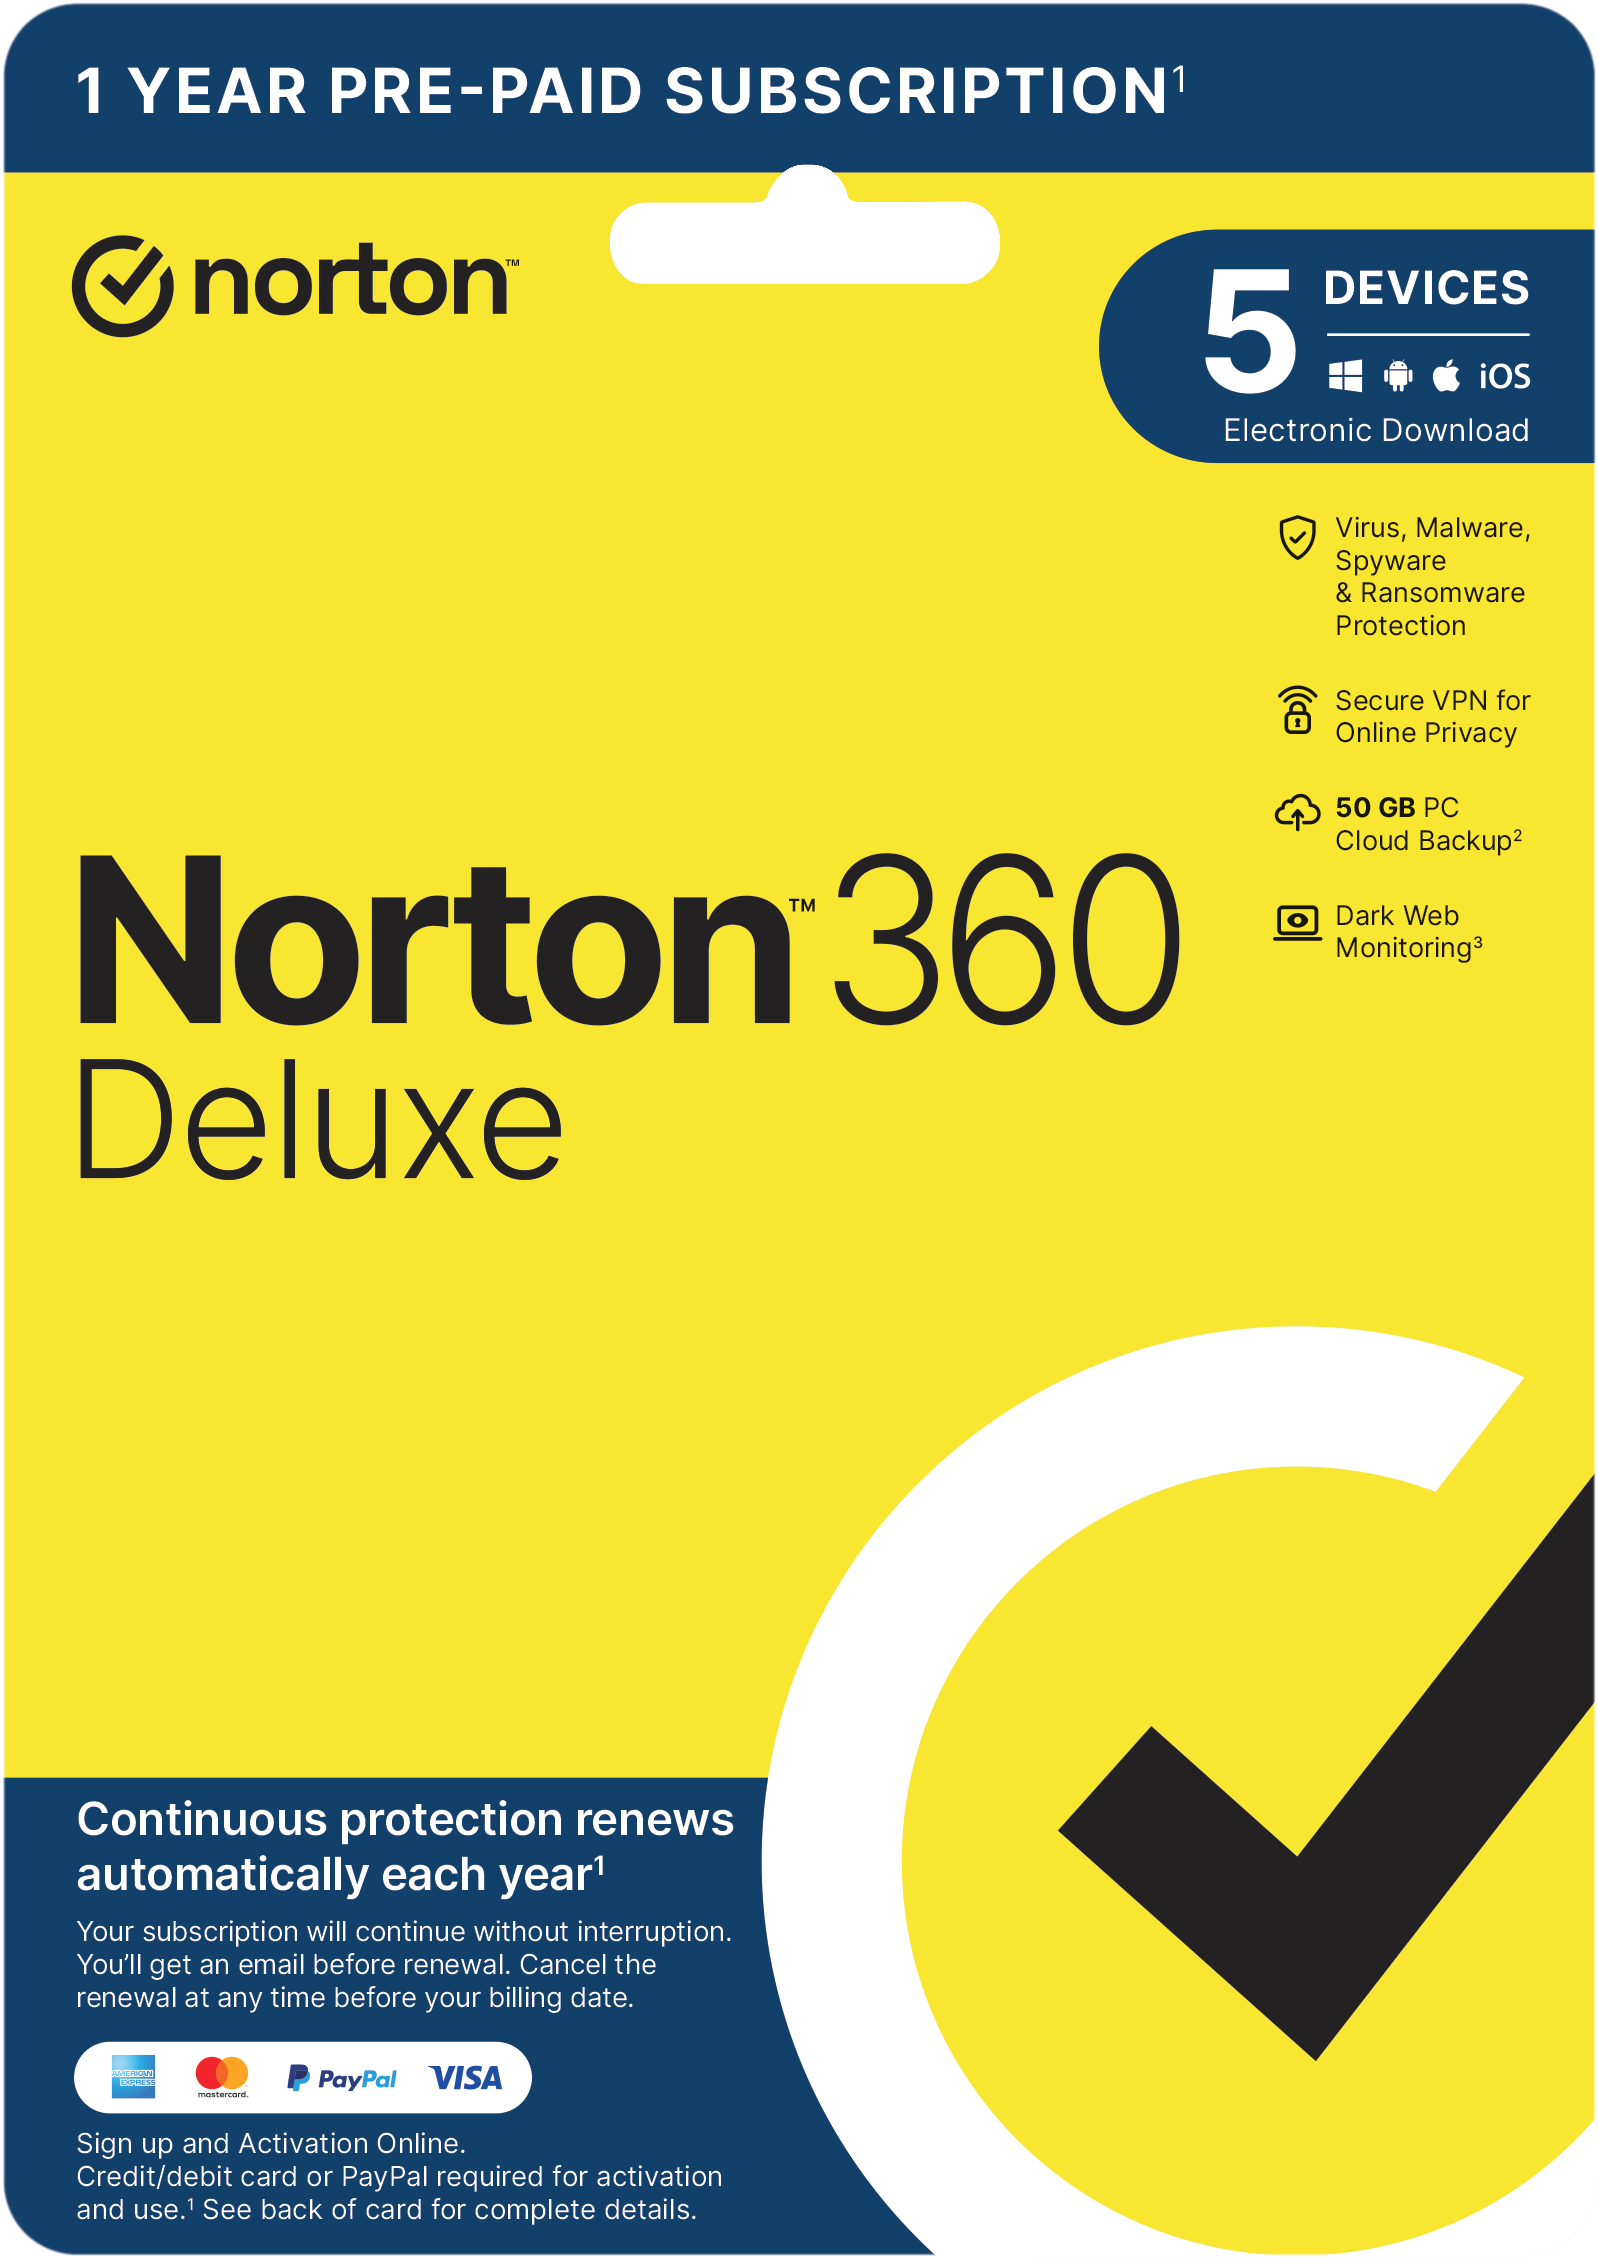  Norton 360 Deluxe USA